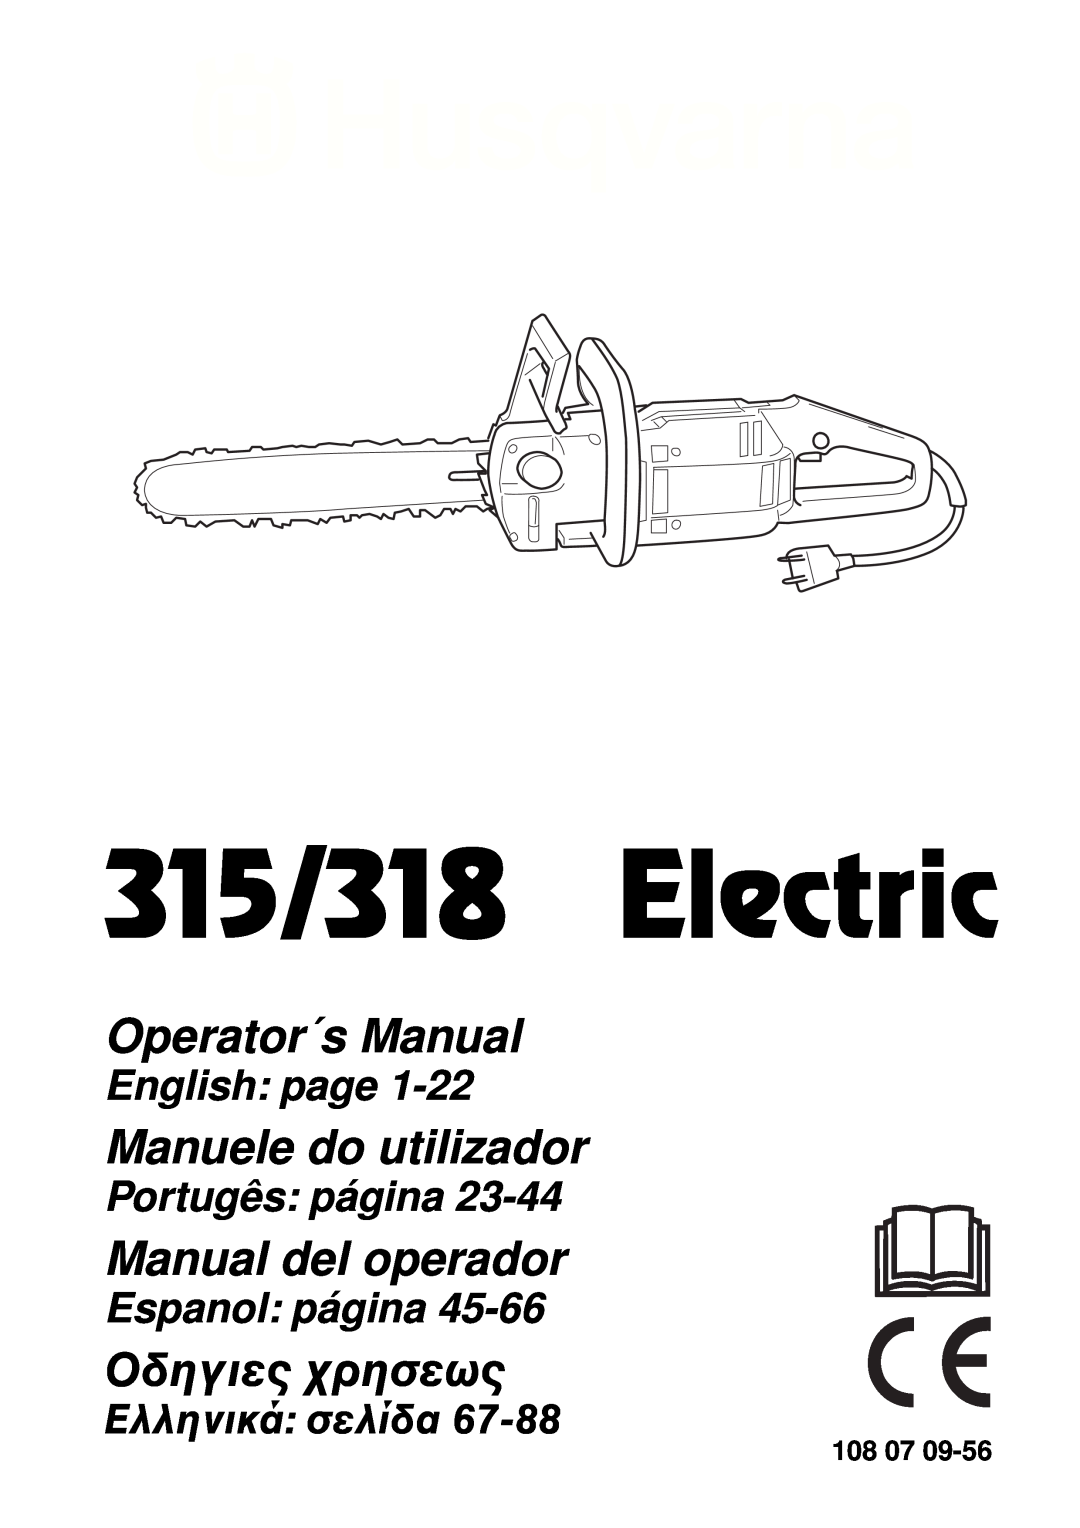 Husqvarna manual 315/318 Electric, Operator´s Manual, Manuele do utilizador, Manual del operador, Oδηγιες, English page 